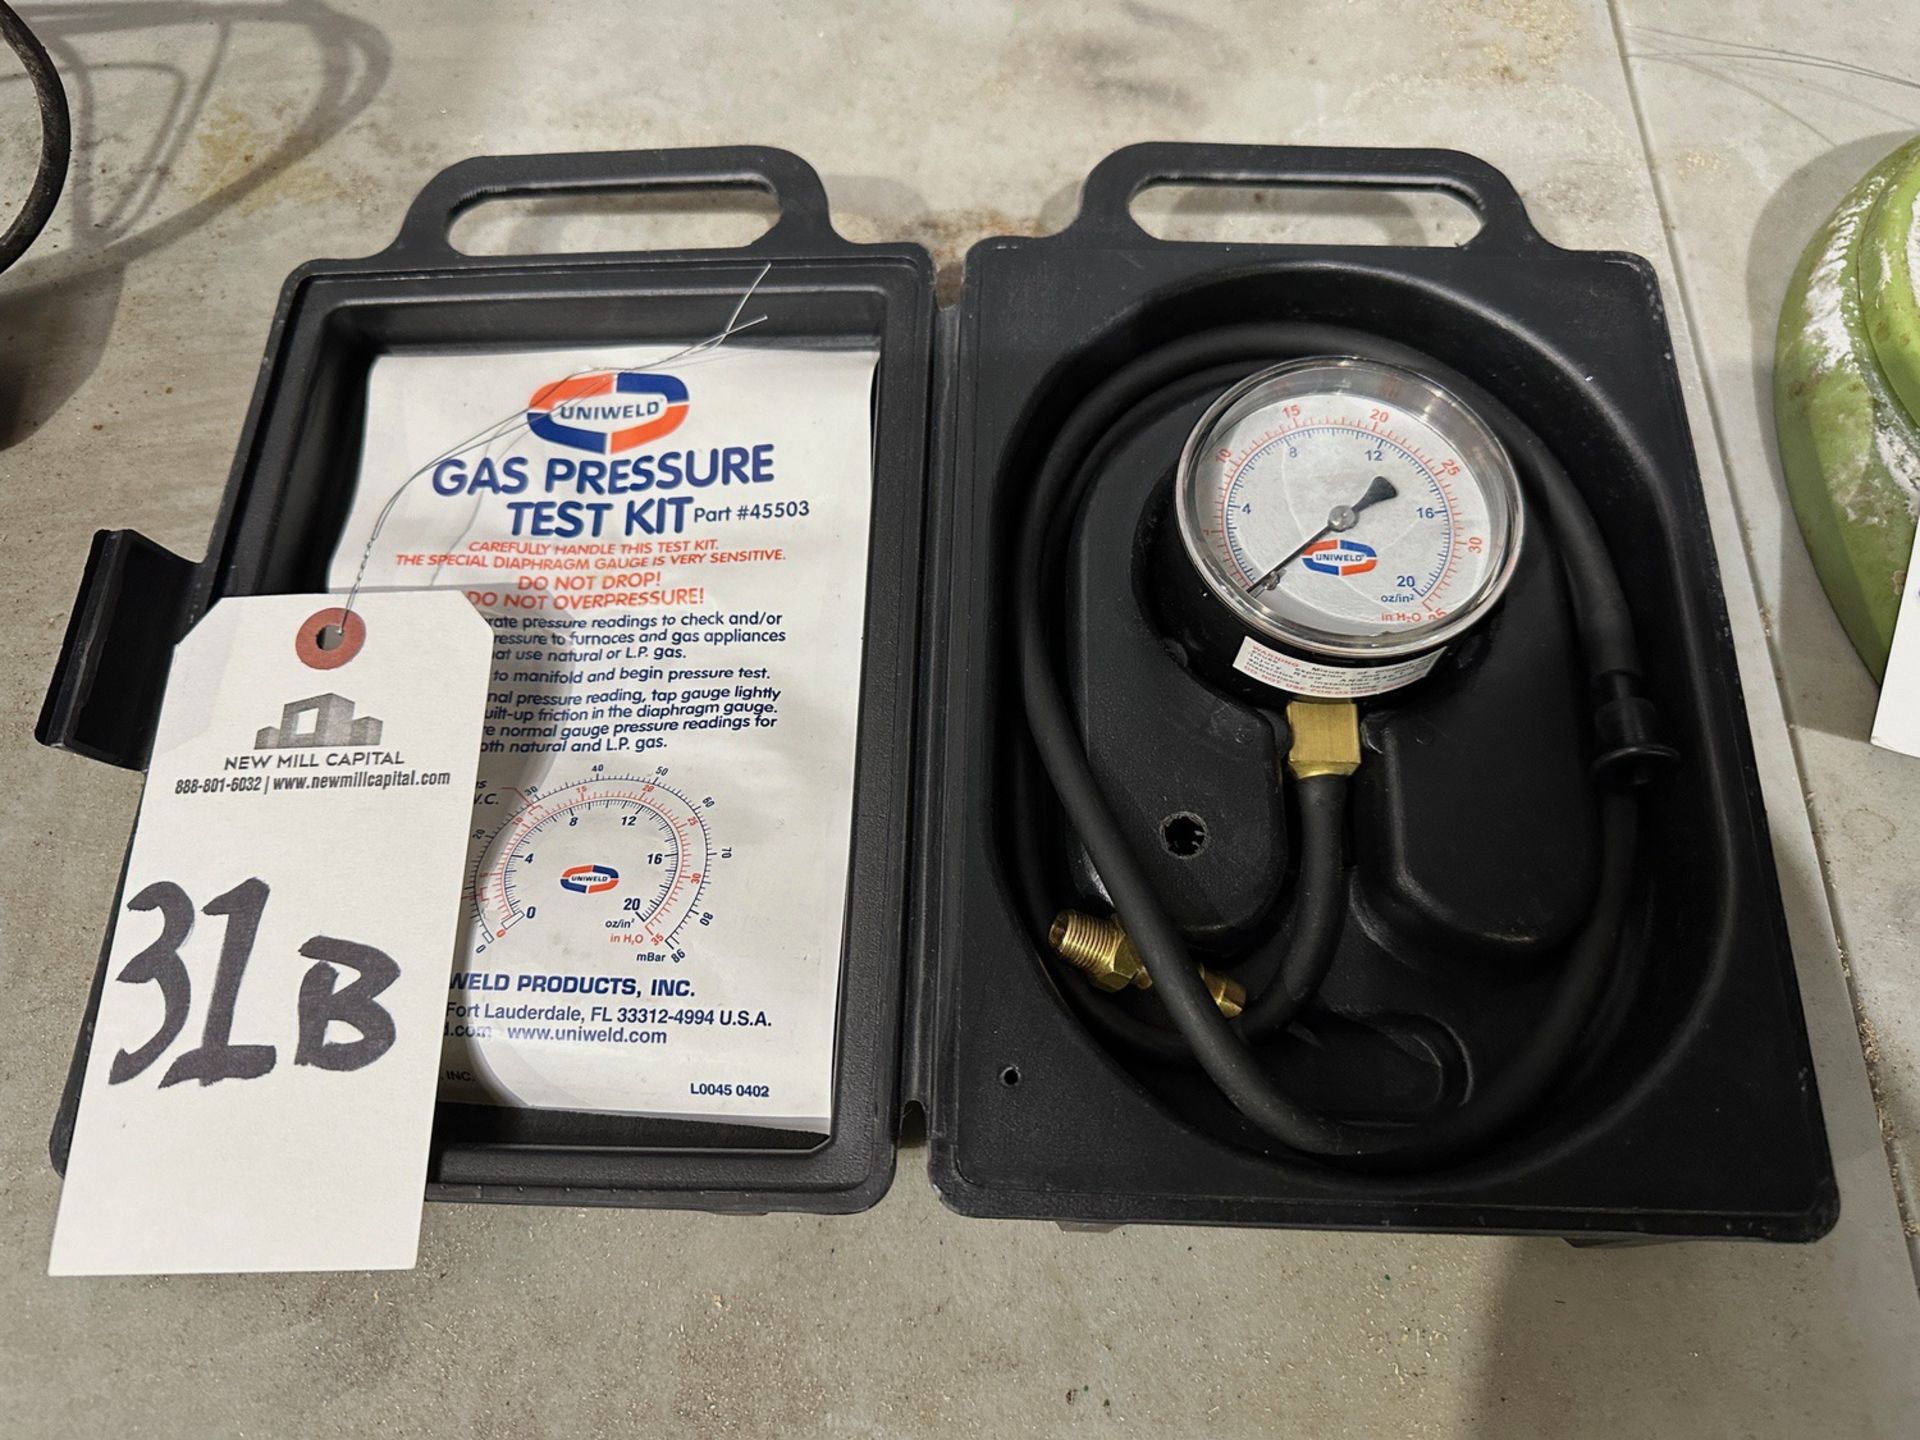 Uniweld Gas Pressure Test Kit | Rig Fee $25